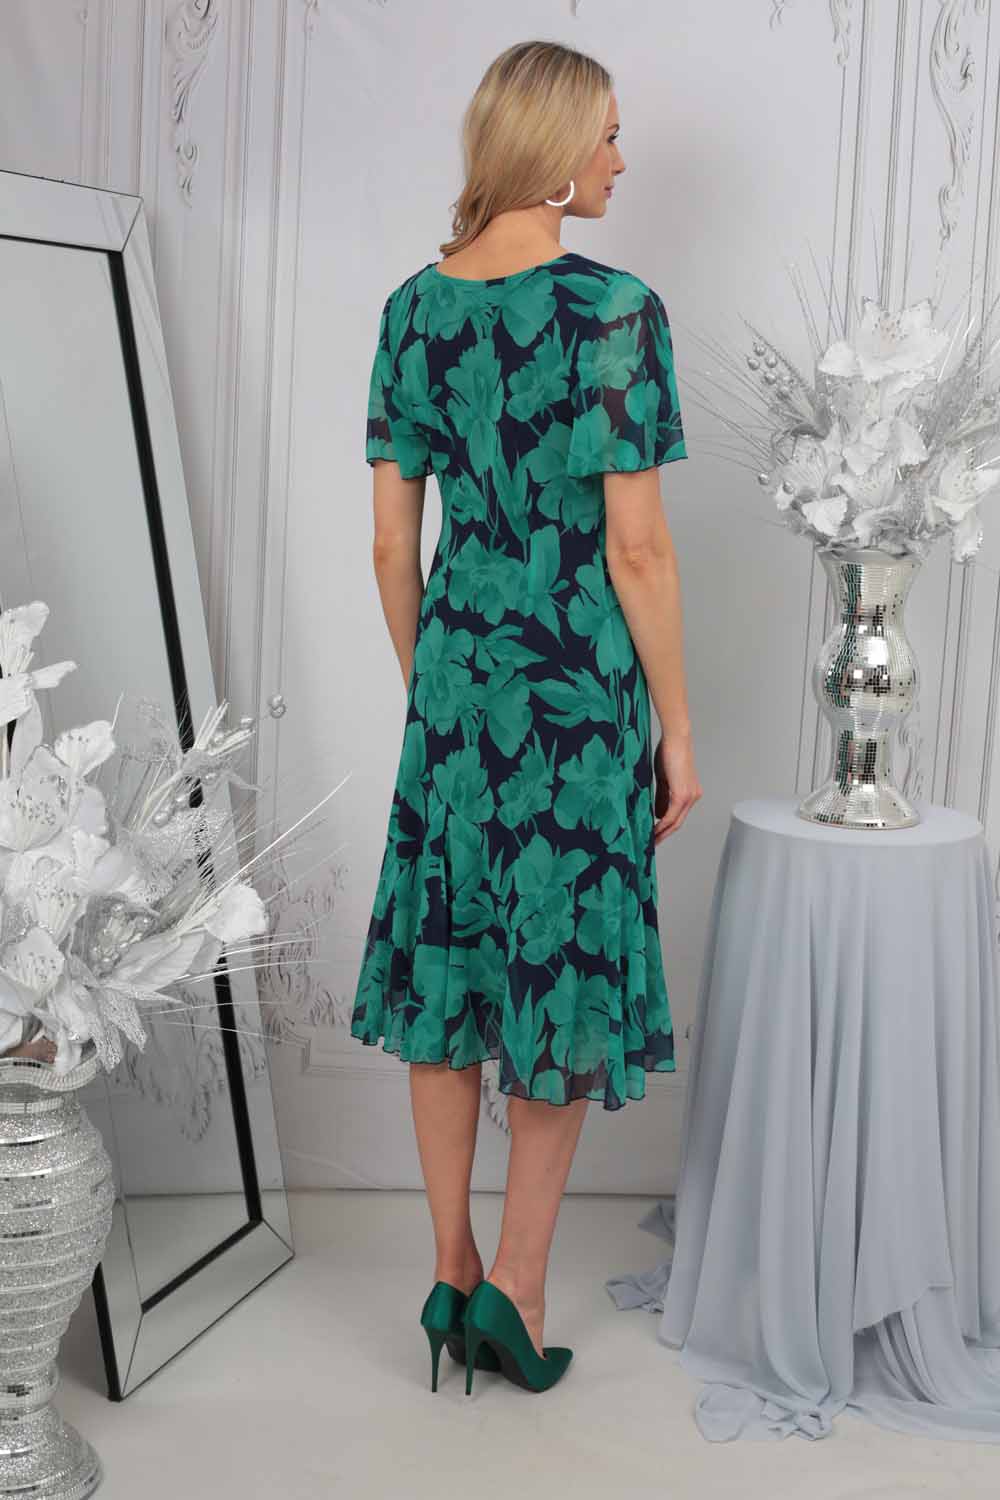 Jade Julianna Floral Print Chiffon Dress, Image 2 of 3